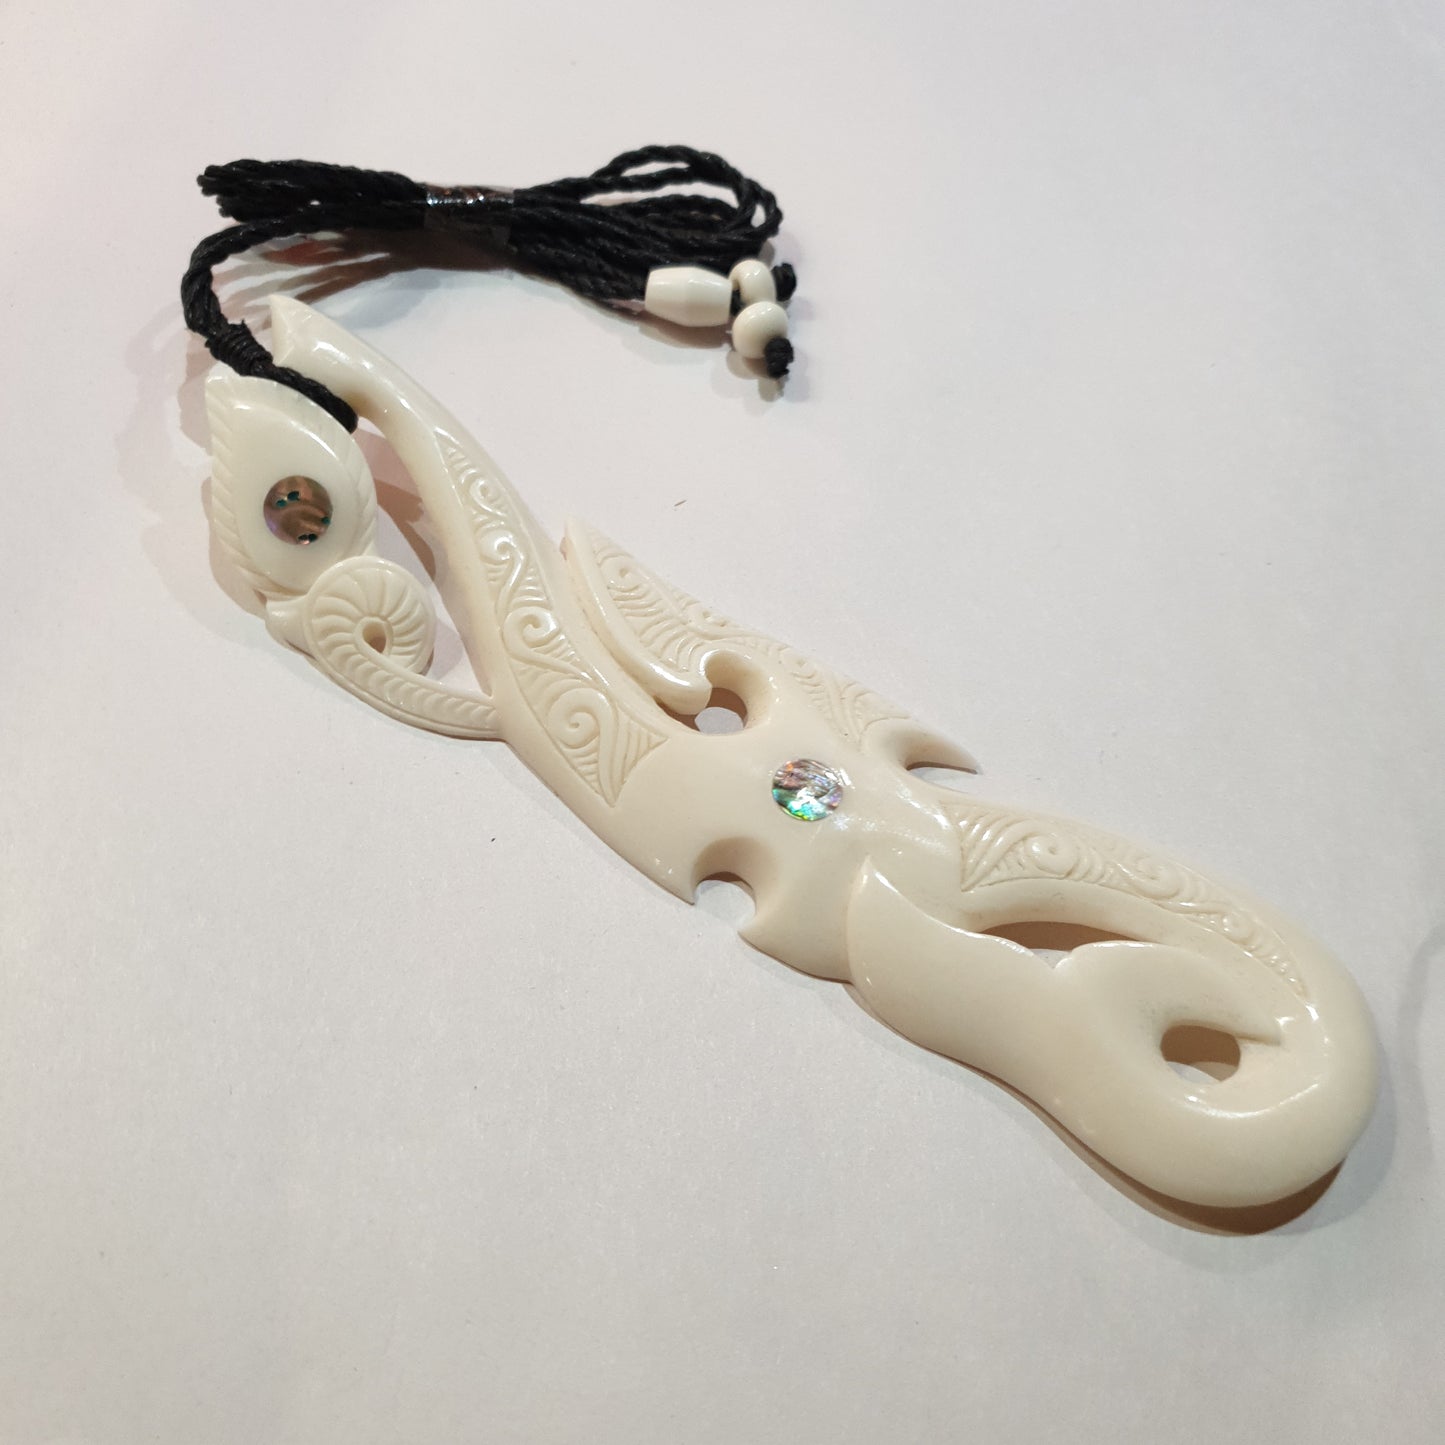 Handcarved Bone Pendant large with adjustable cord - Rivendell Shop